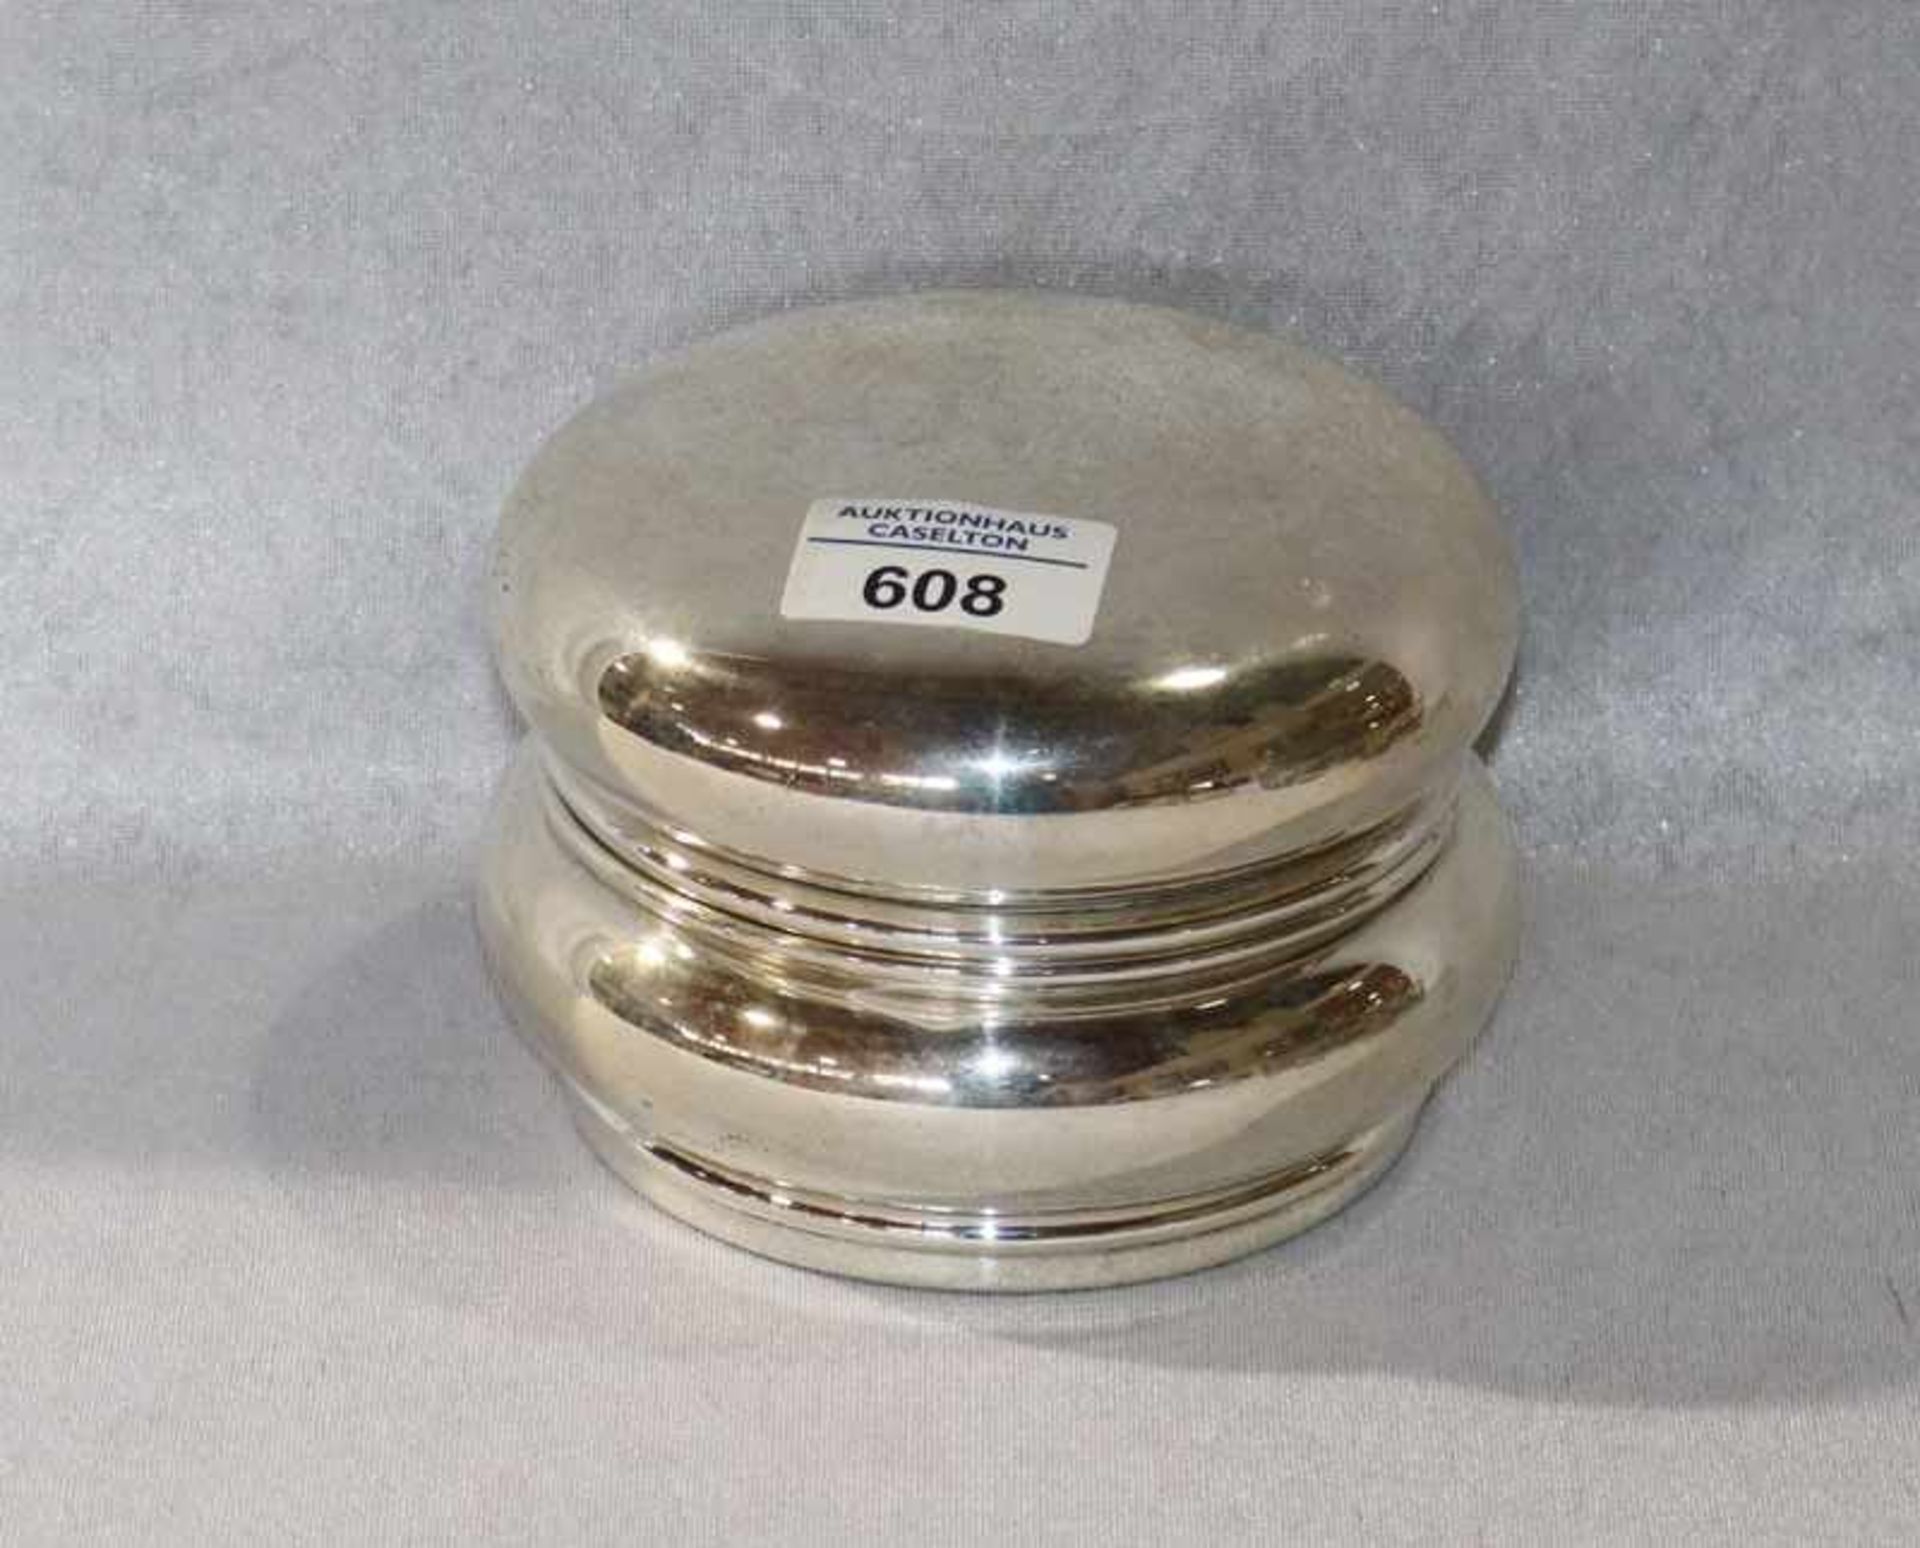 Deckeldose, 800 Silber, innen vergoldet, 323 gr., H 9 cm, D 13 cm, Gebrauchsspuren